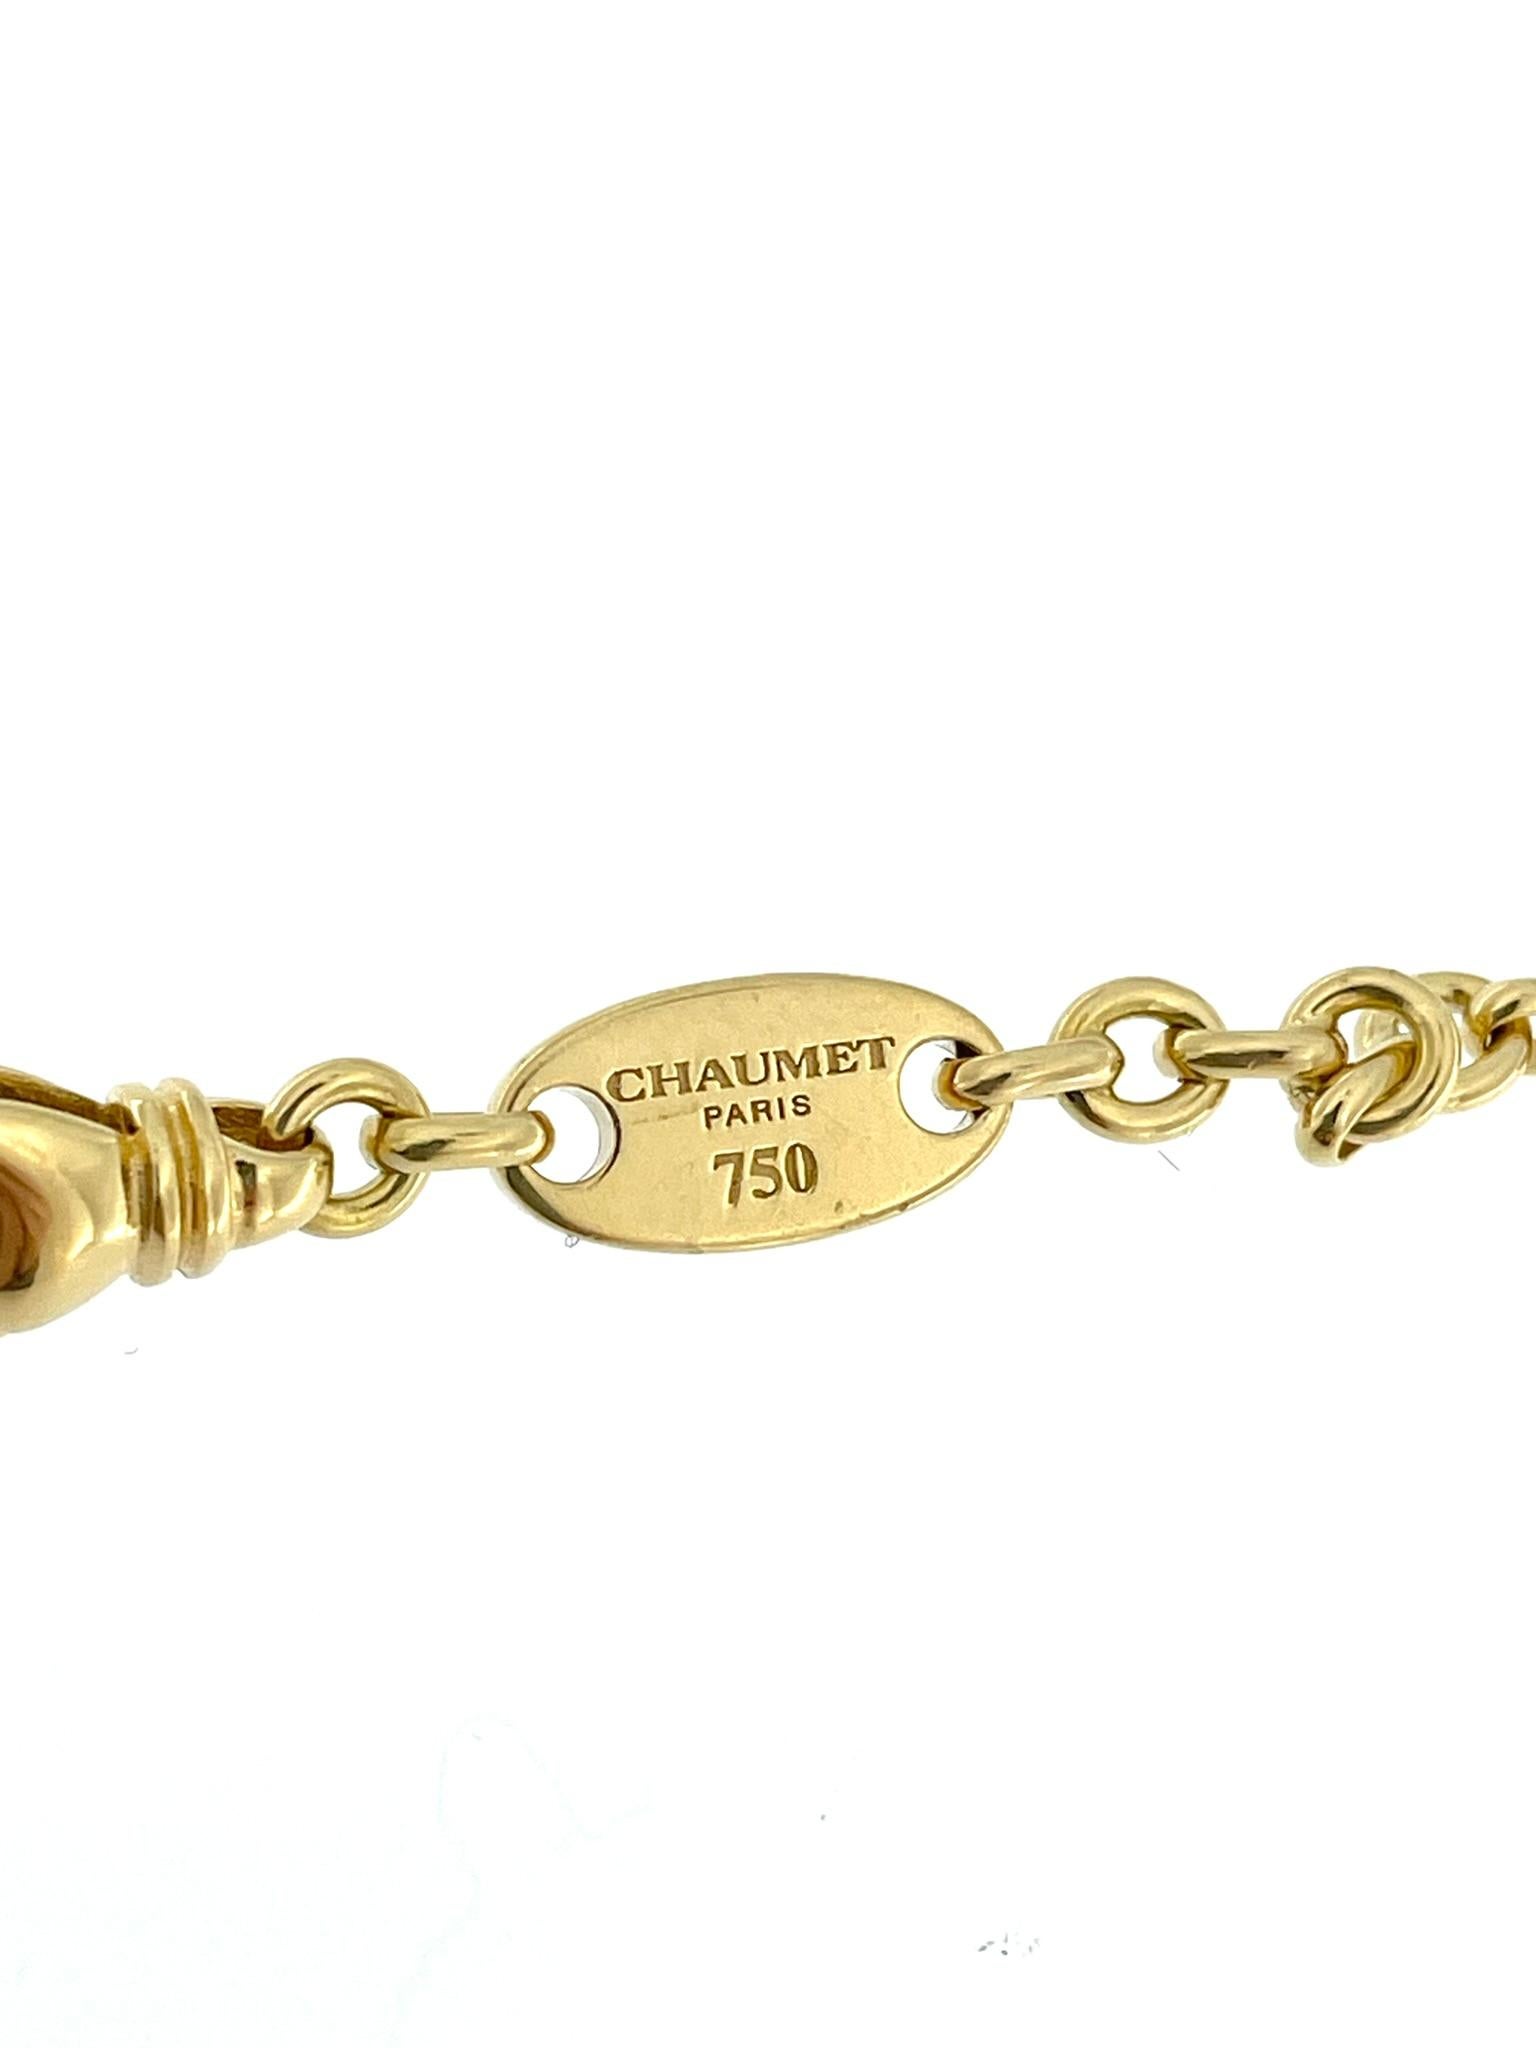 Modern Chaumet 18 karat Yellow Gold Chain For Sale